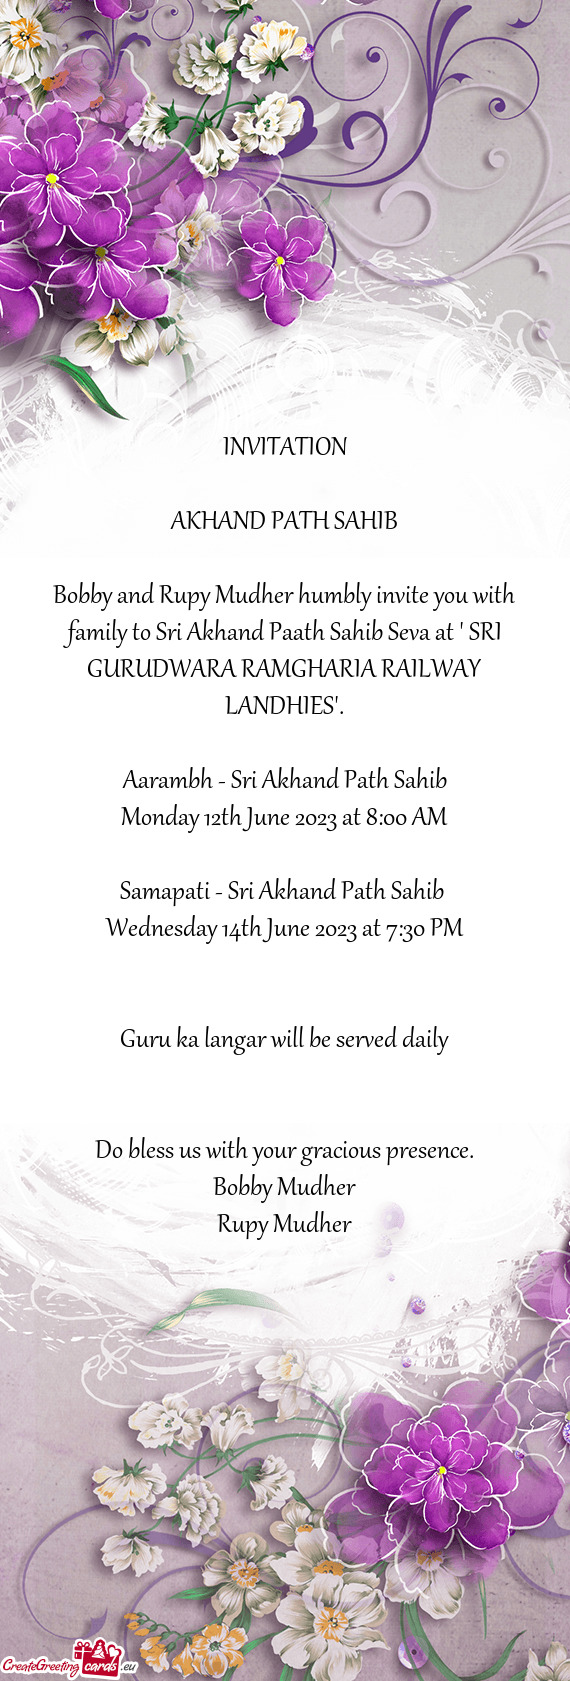 Bobby and Rupy Mudher humbly invite you with family to Sri Akhand Paath Sahib Seva at 